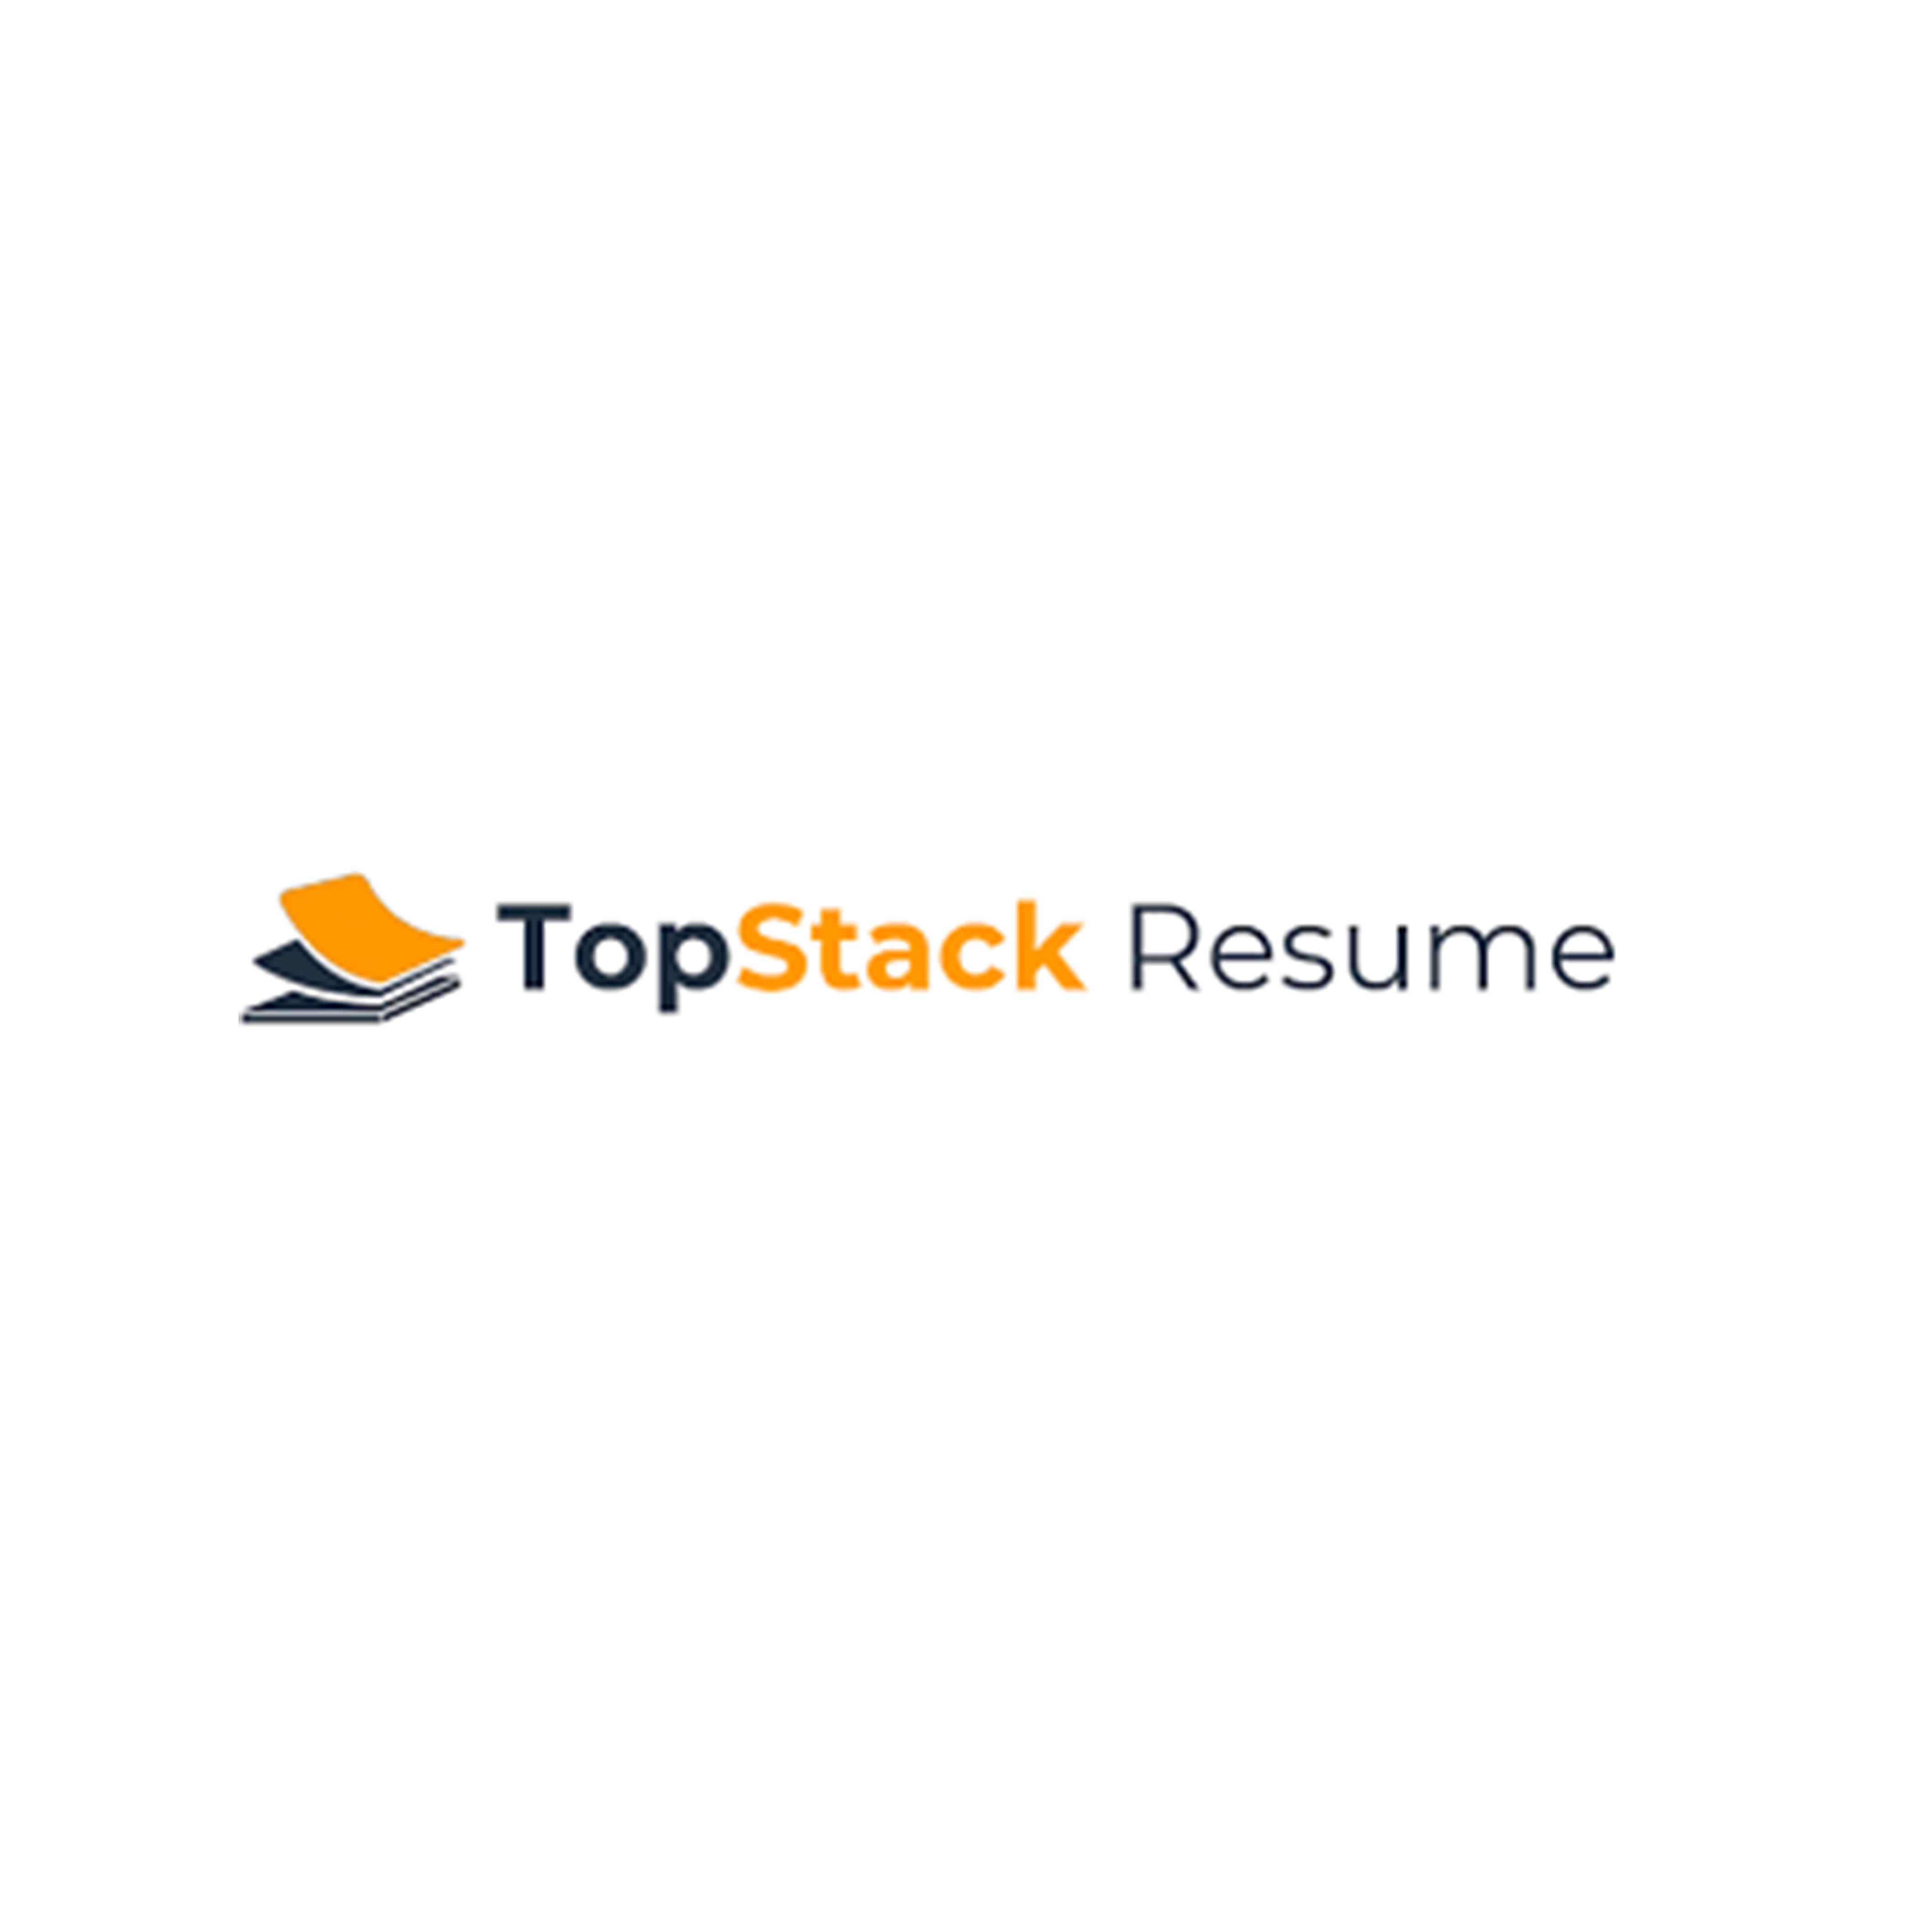 Shop TopStack Resume logo